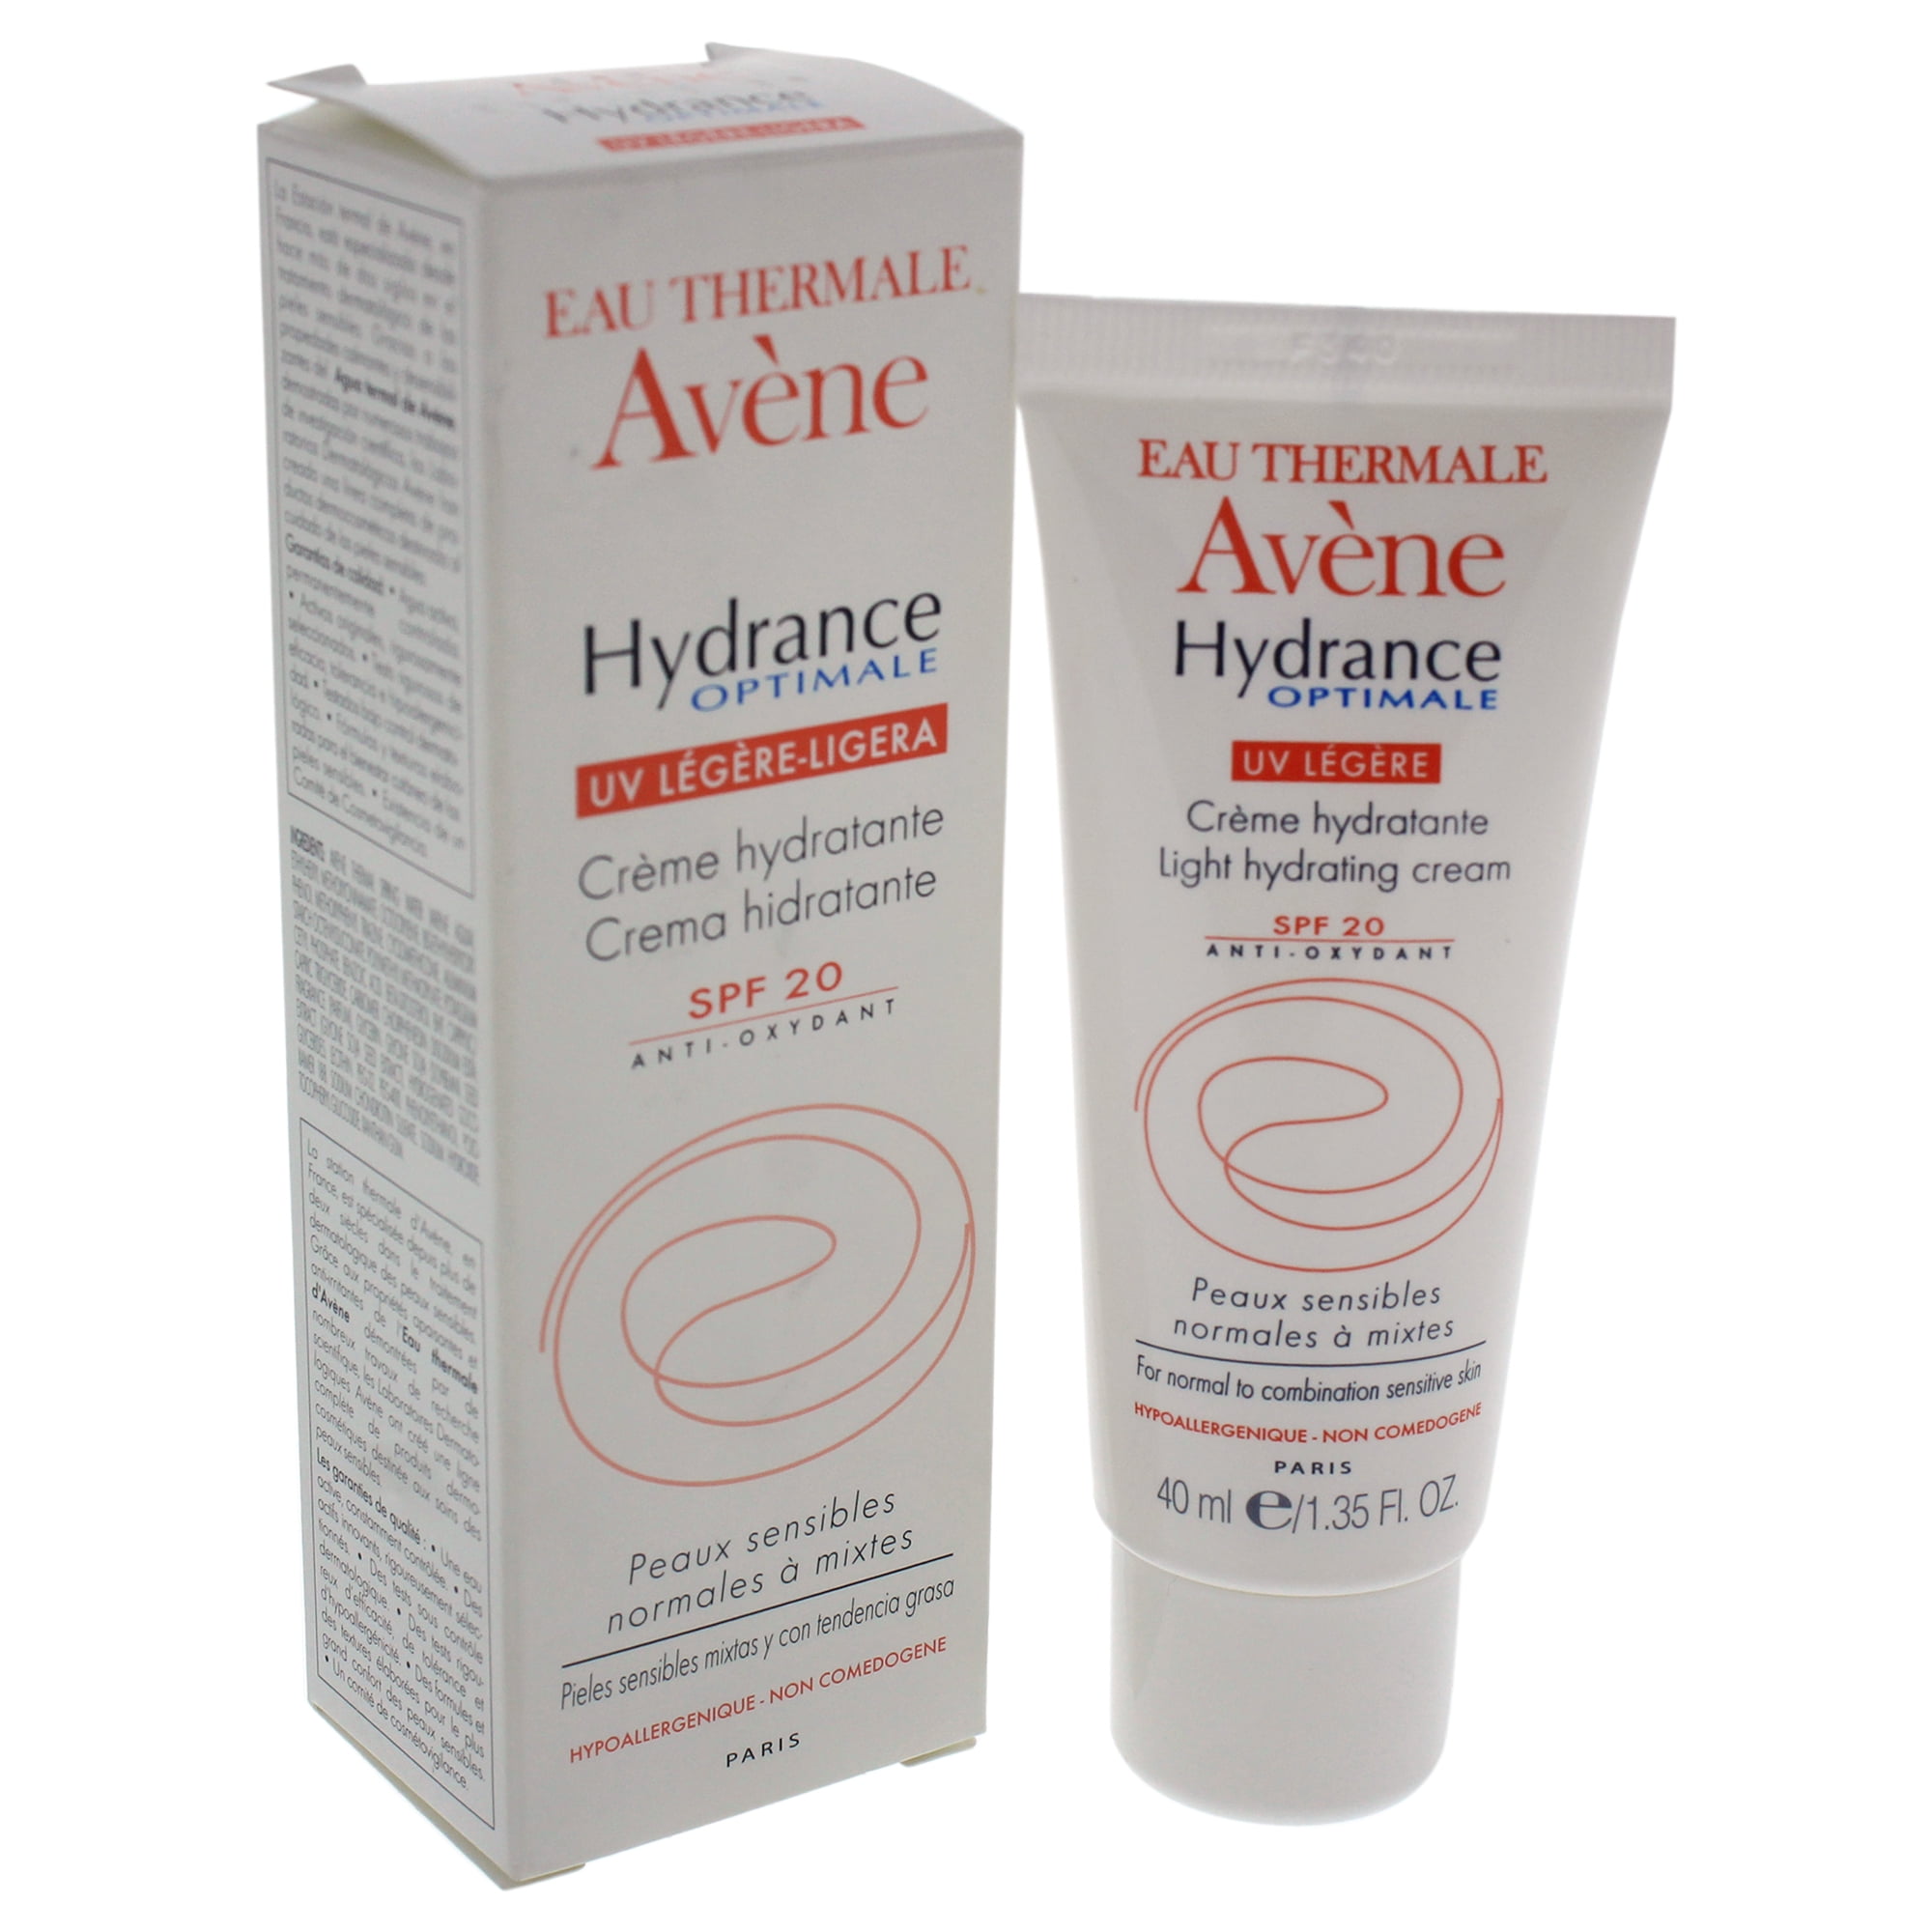 Avene Eau Thermale Hydrance Optimale Cream SPF 20, 1.35 Oz